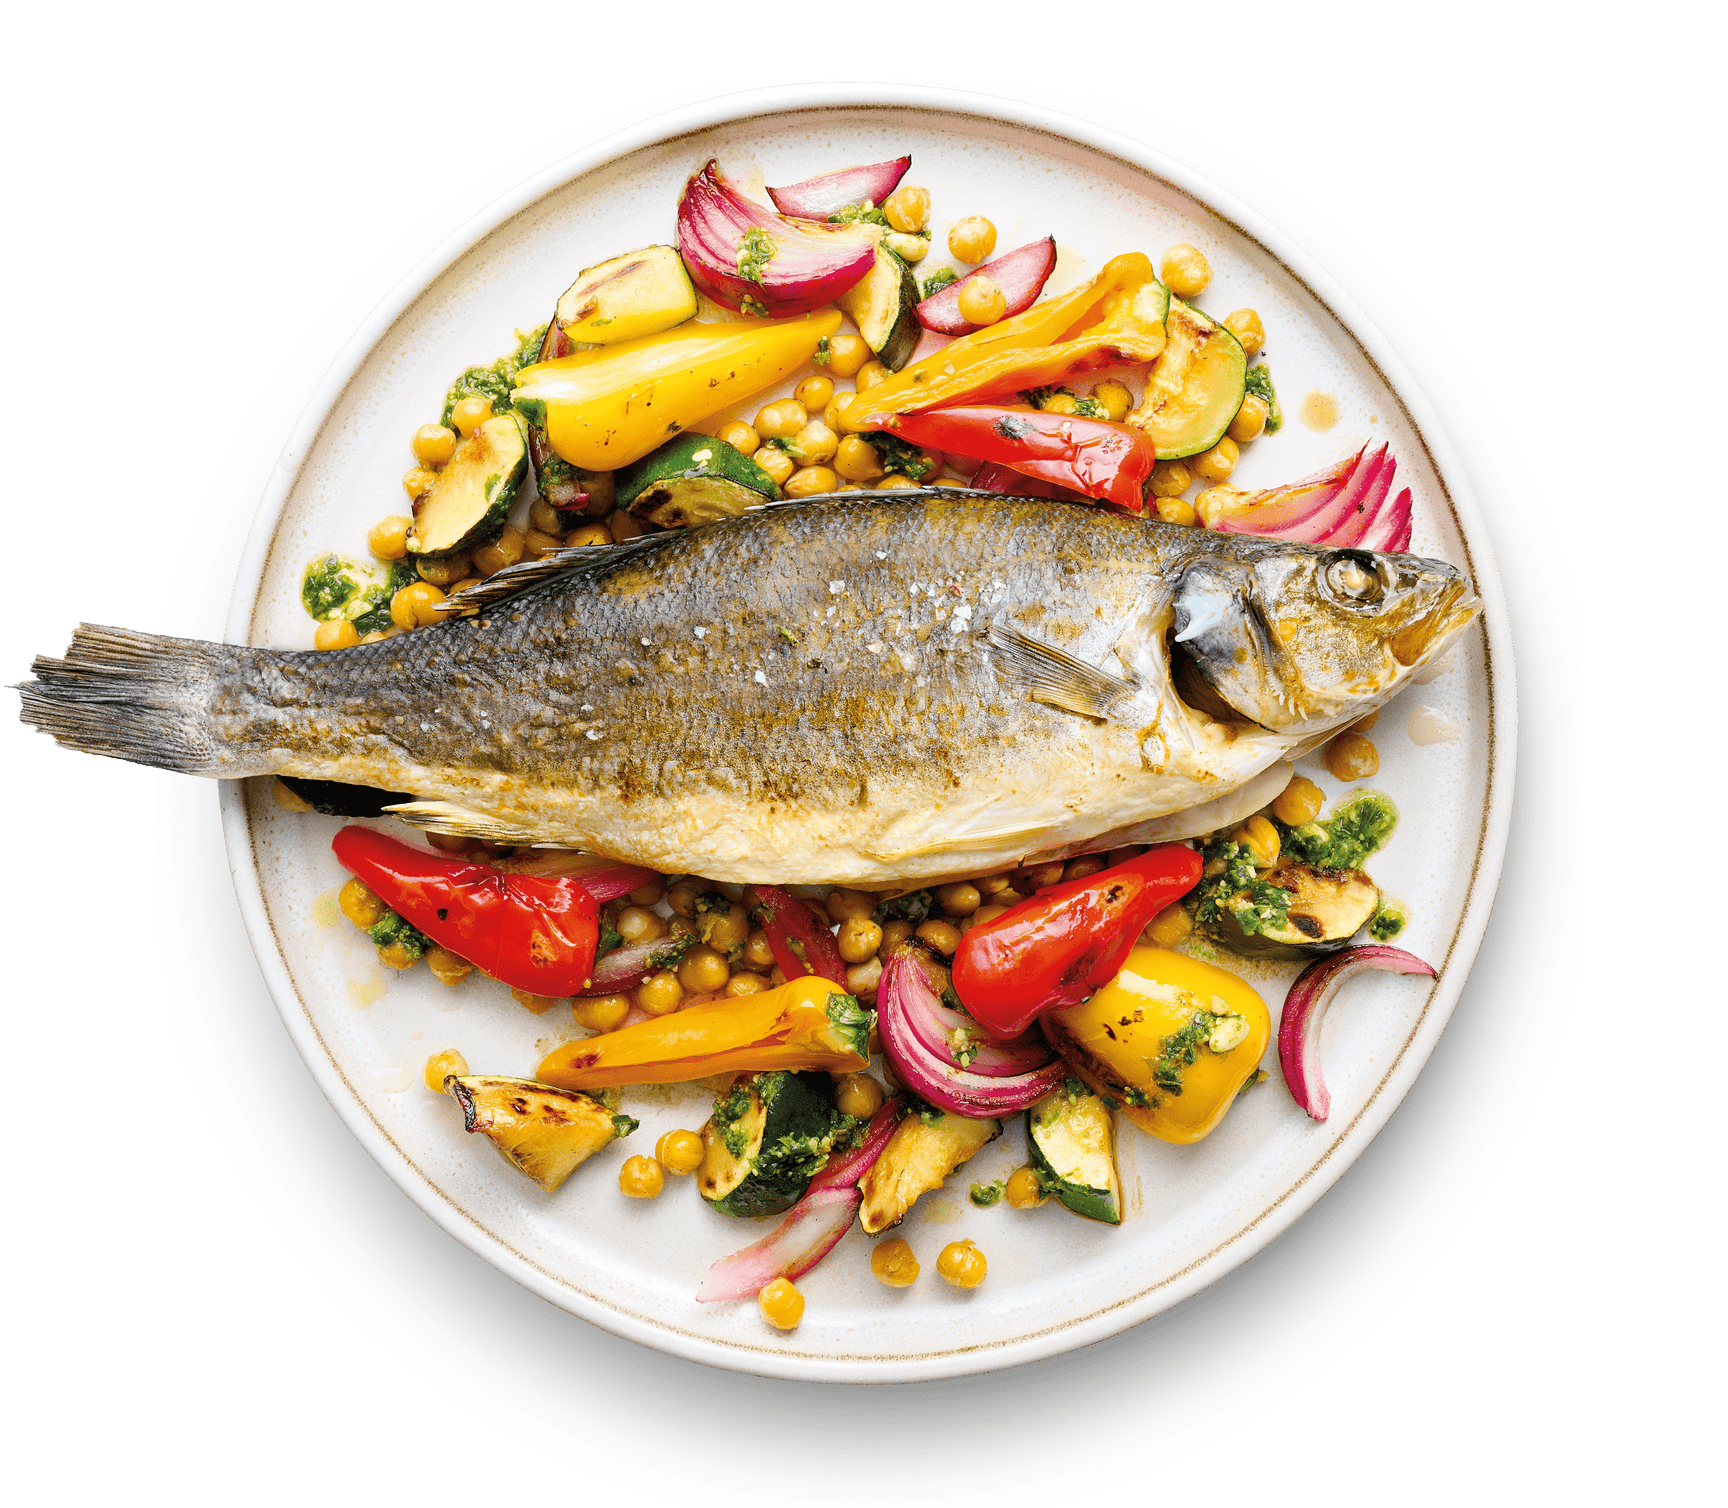 Fred's whole sea bass, Mediterranean vegetable traybake and pesto